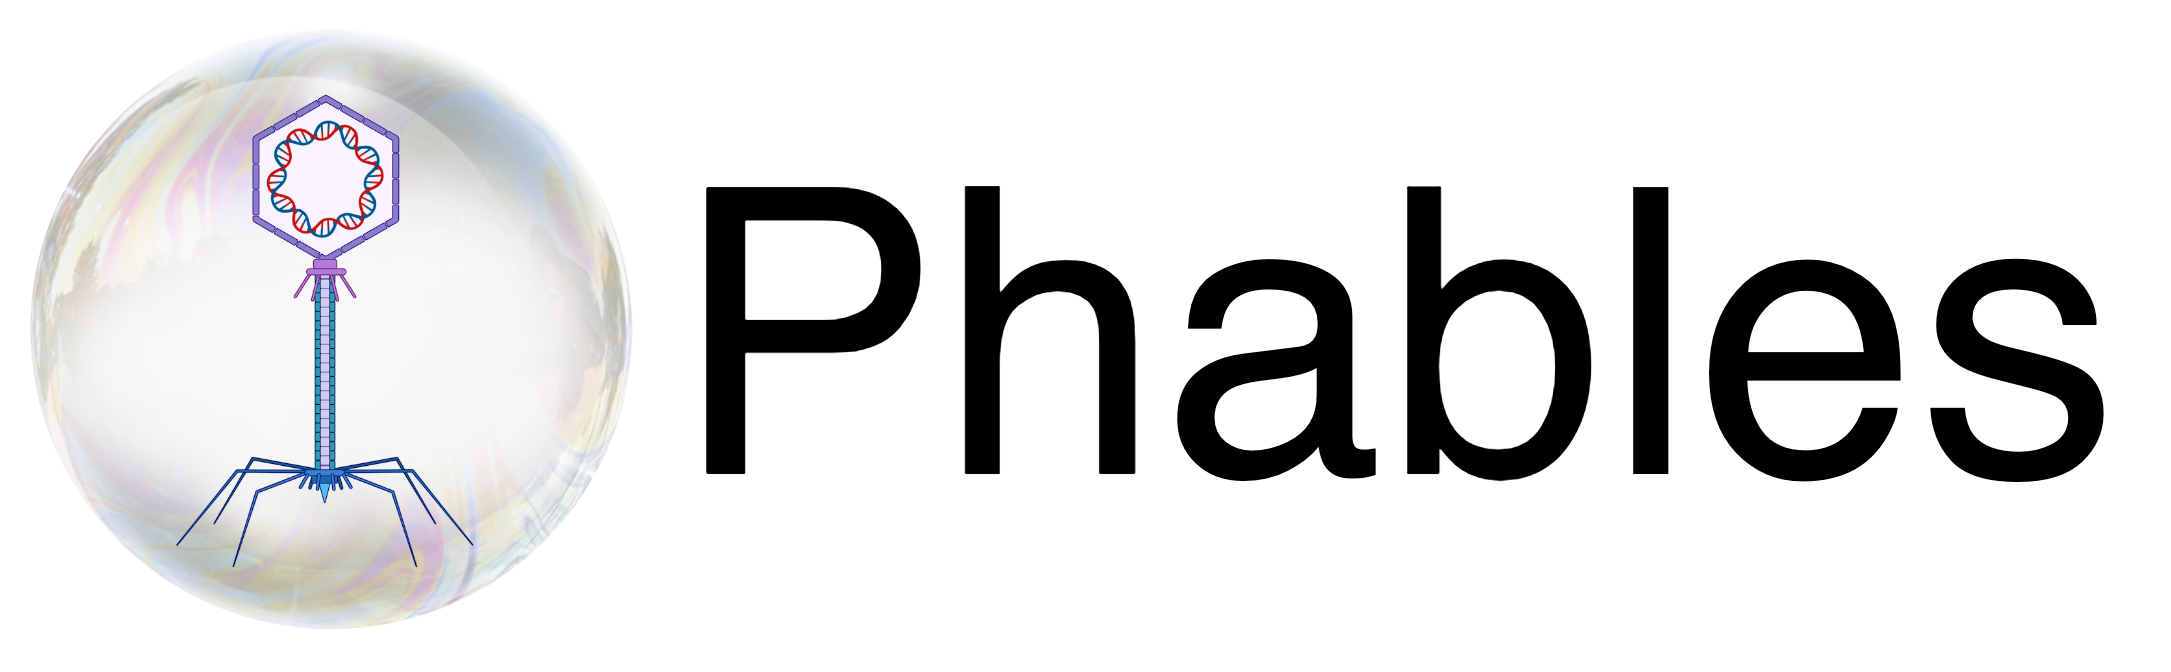 phables logo